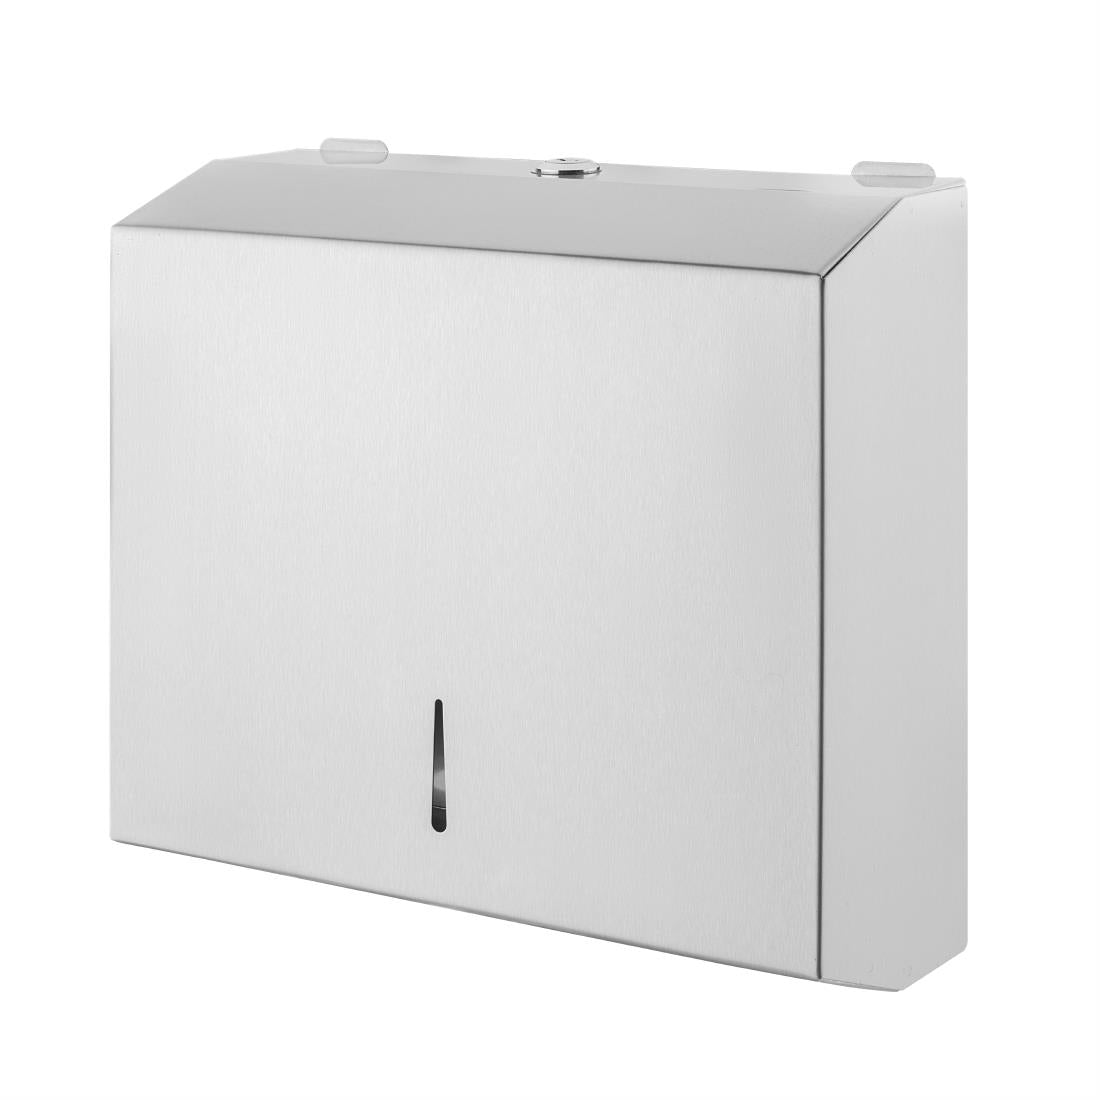 Jantex Stainless Paper Towel Dispenser JD Catering Equipment Solutions Ltd